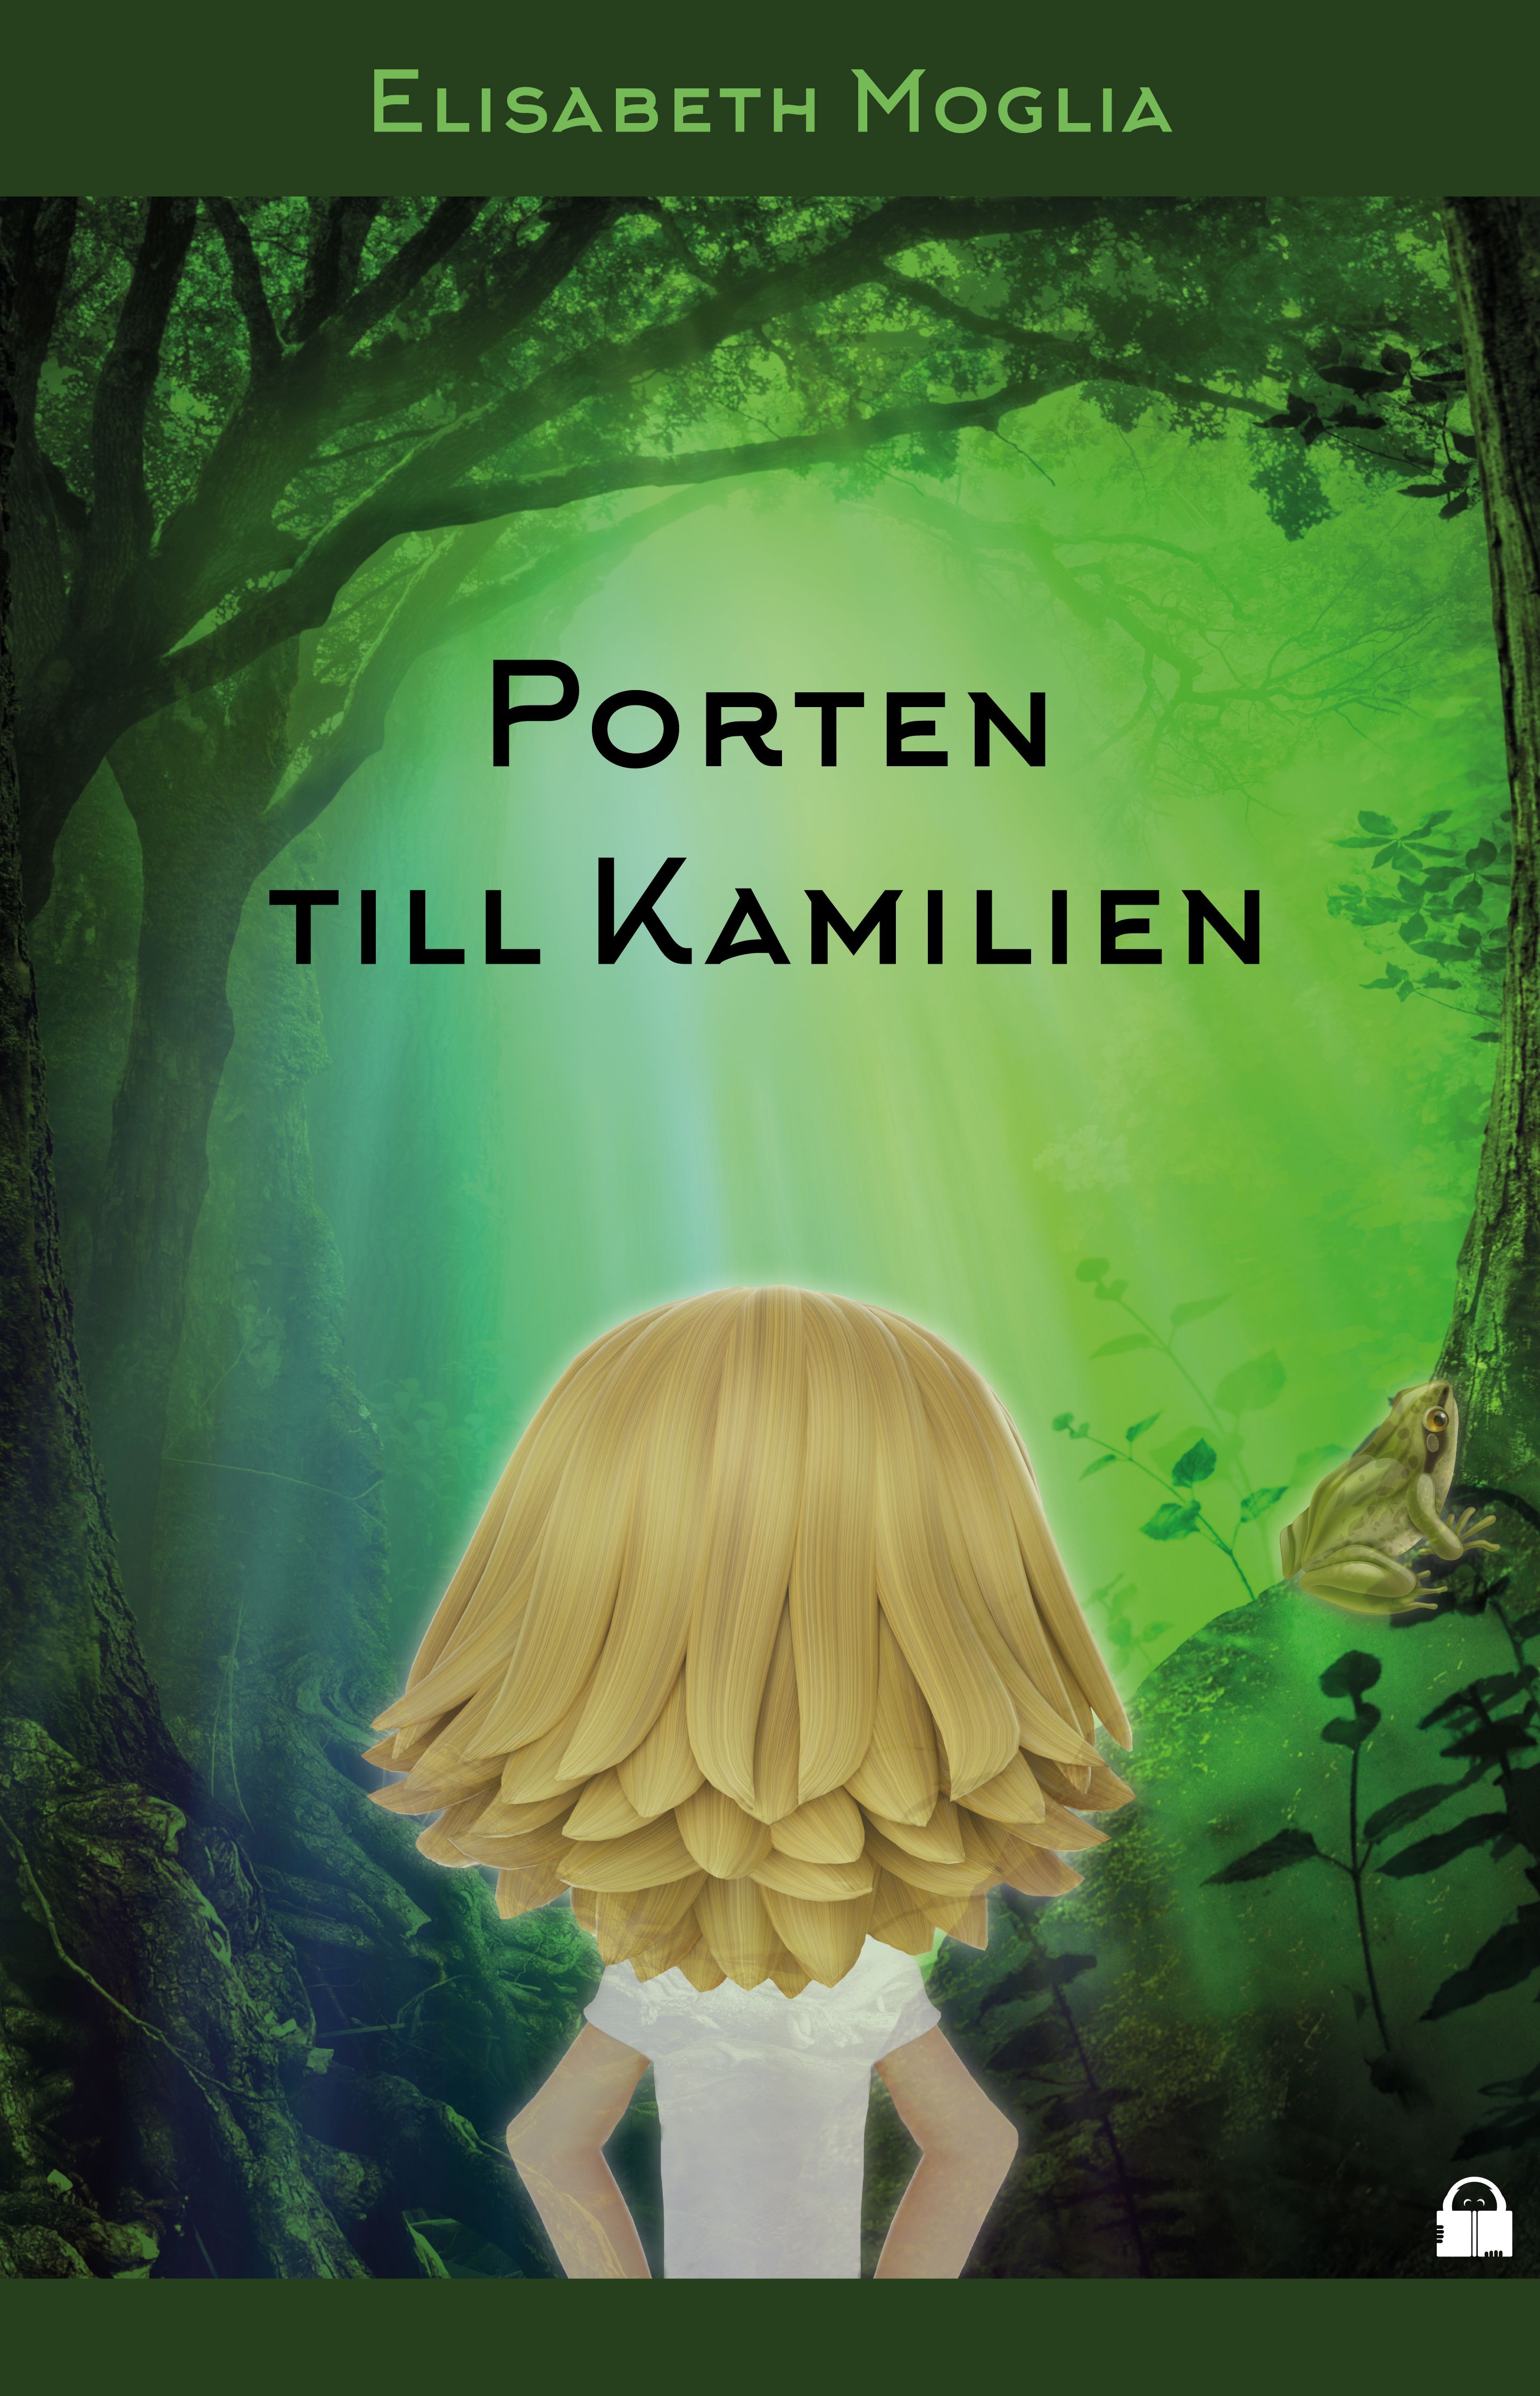 Porten till Kamilien, eBook by Elisabeth Moglia